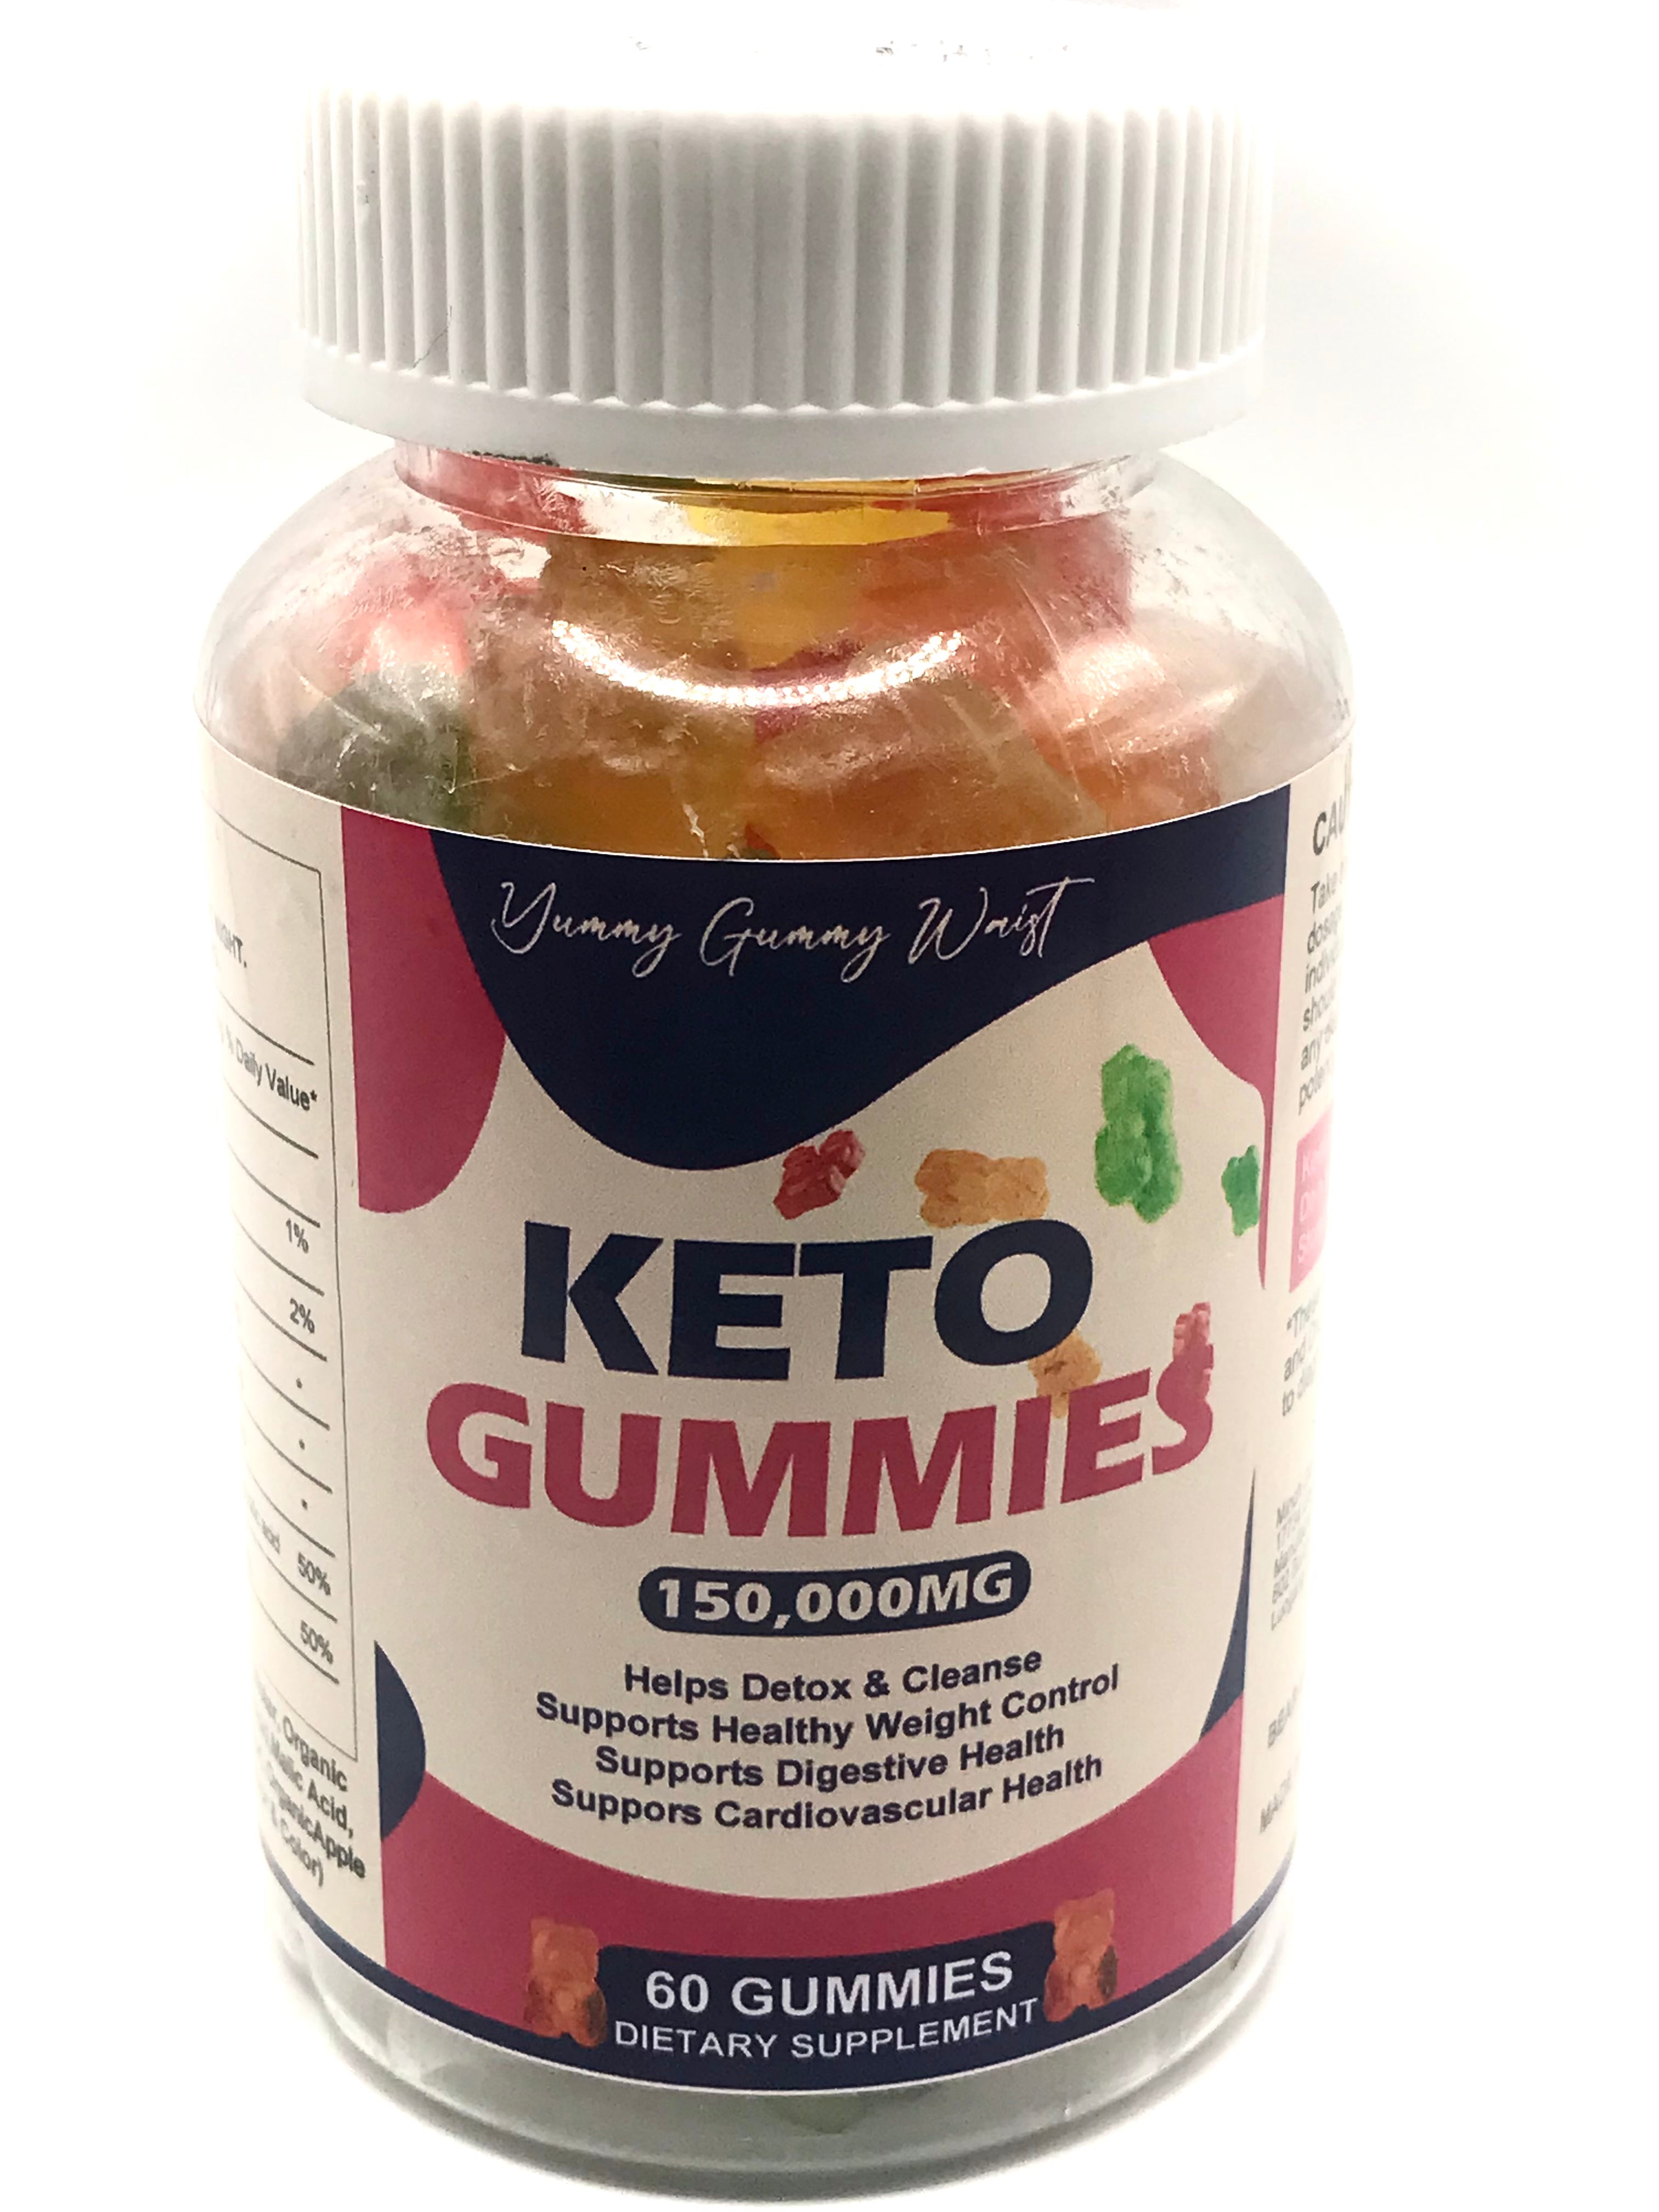 Keto Gummies - Yummy Gummy Waist